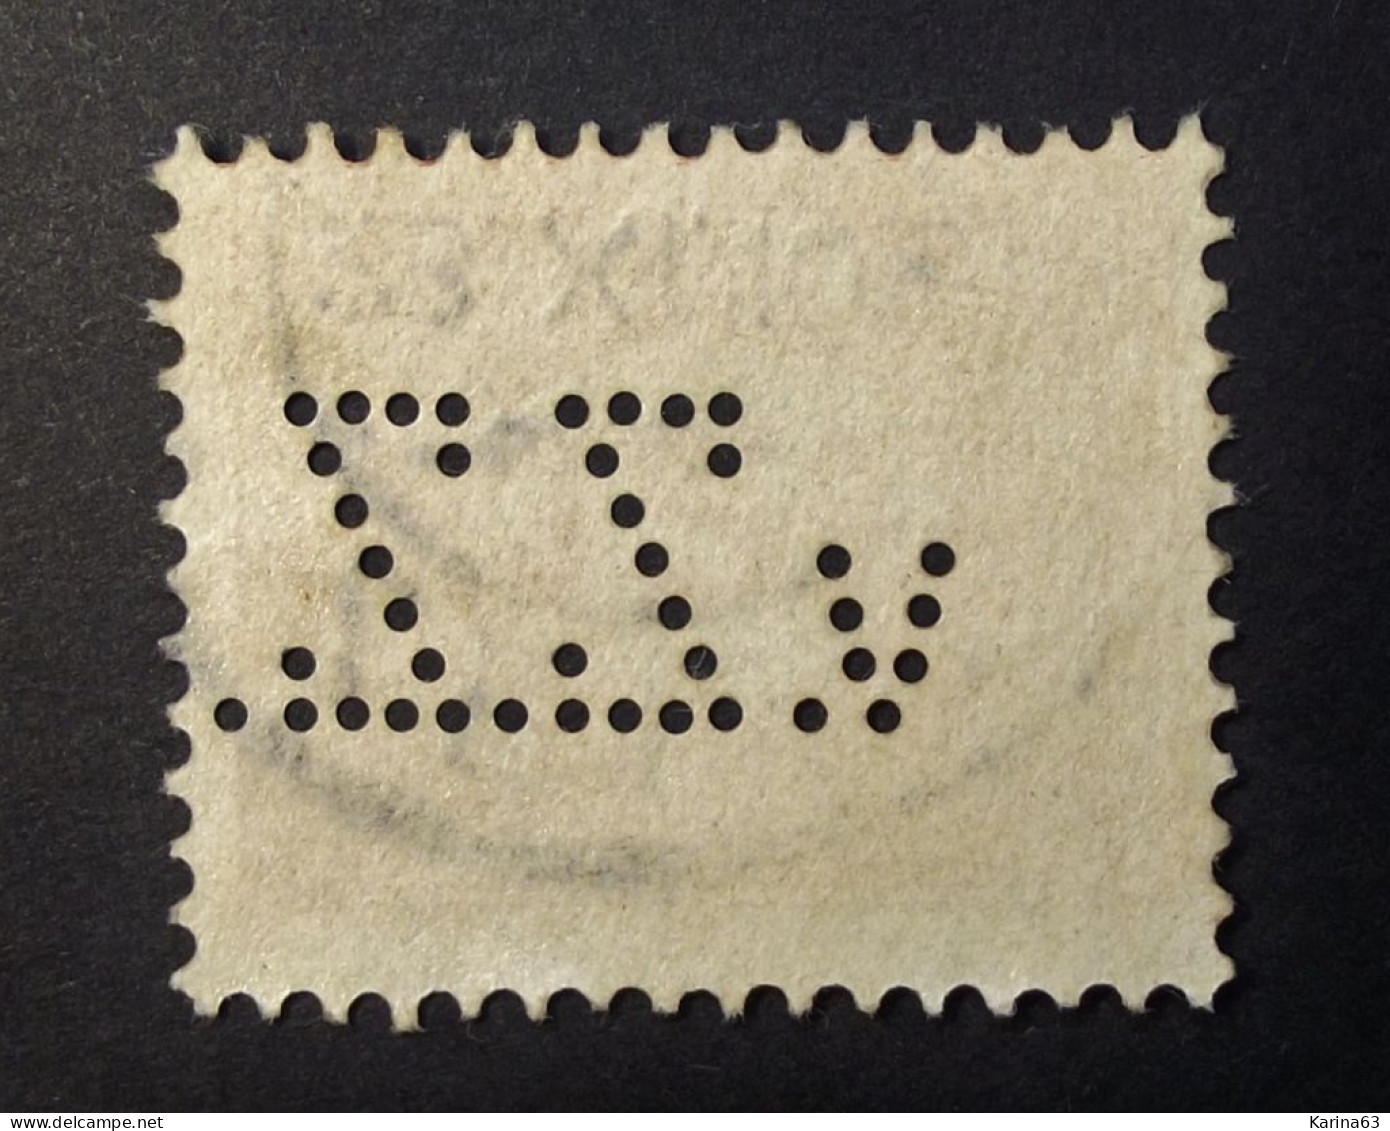 Nederland - Pays-Bas - 1913 -  Perfin - Lochung - V. Z. Z. - Van Zanten En Zoon - Pharmacy - Cancelled - Perforadas